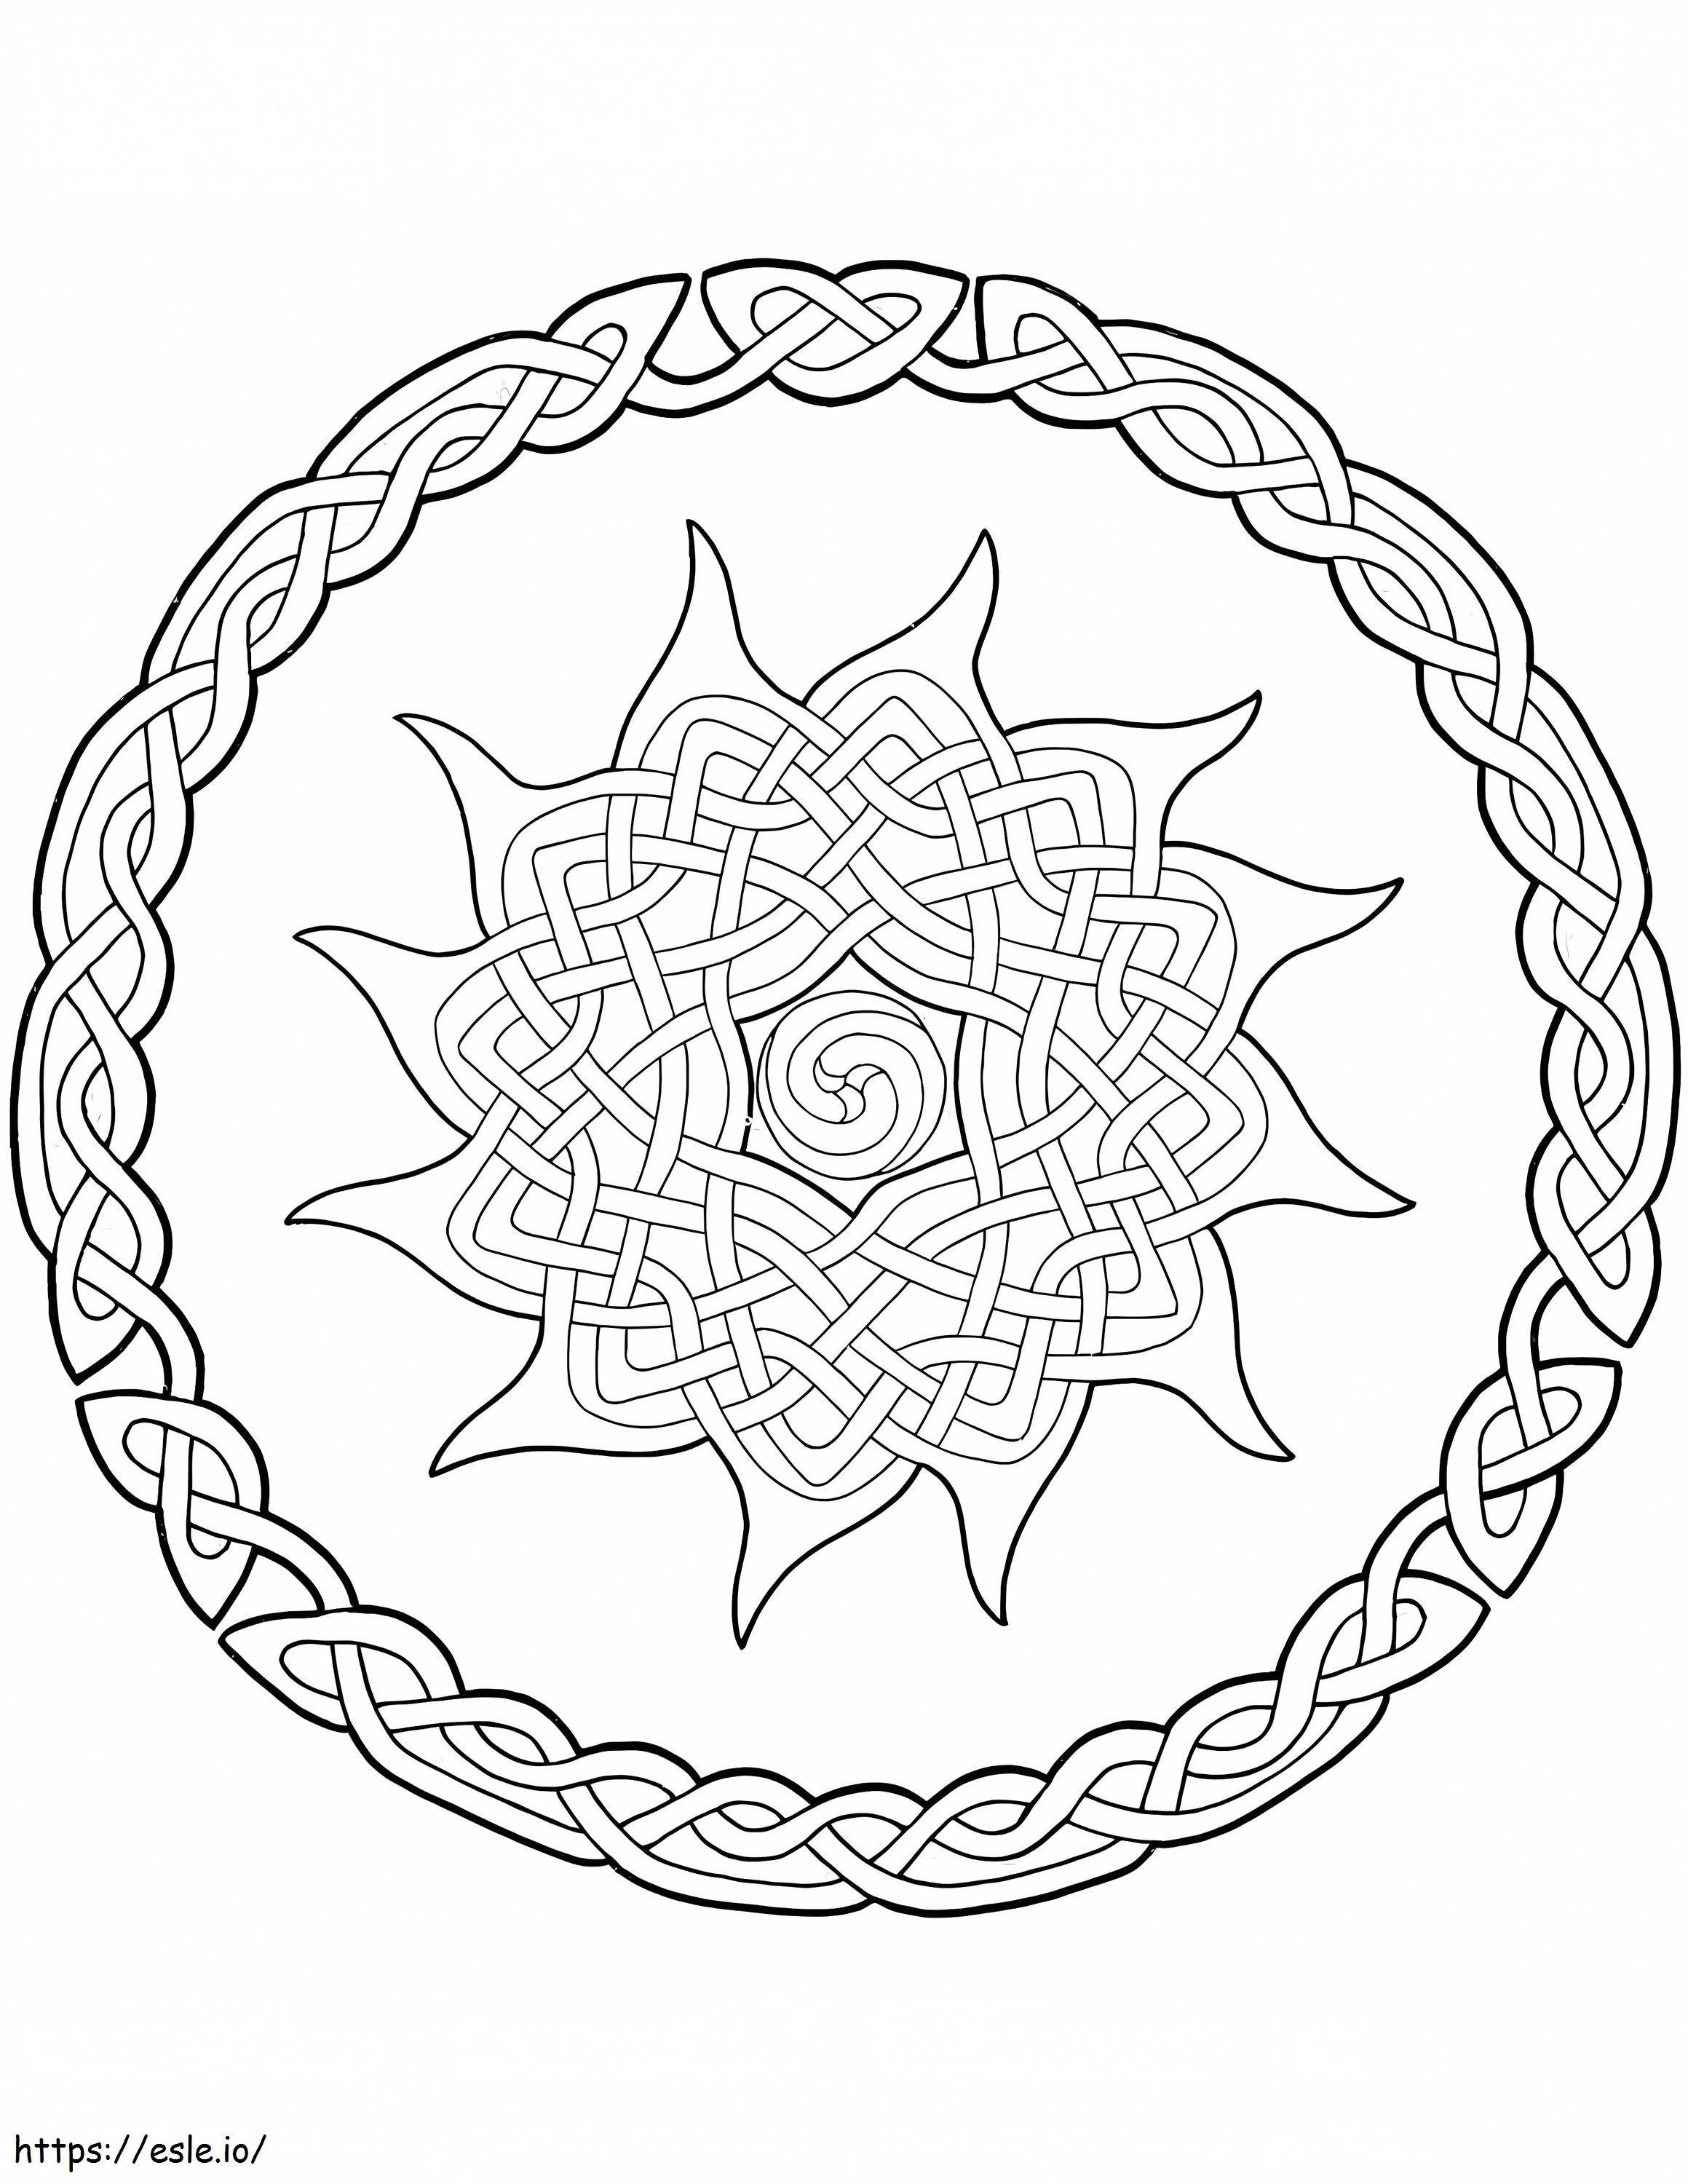 Keltisches Mandala ausmalbilder